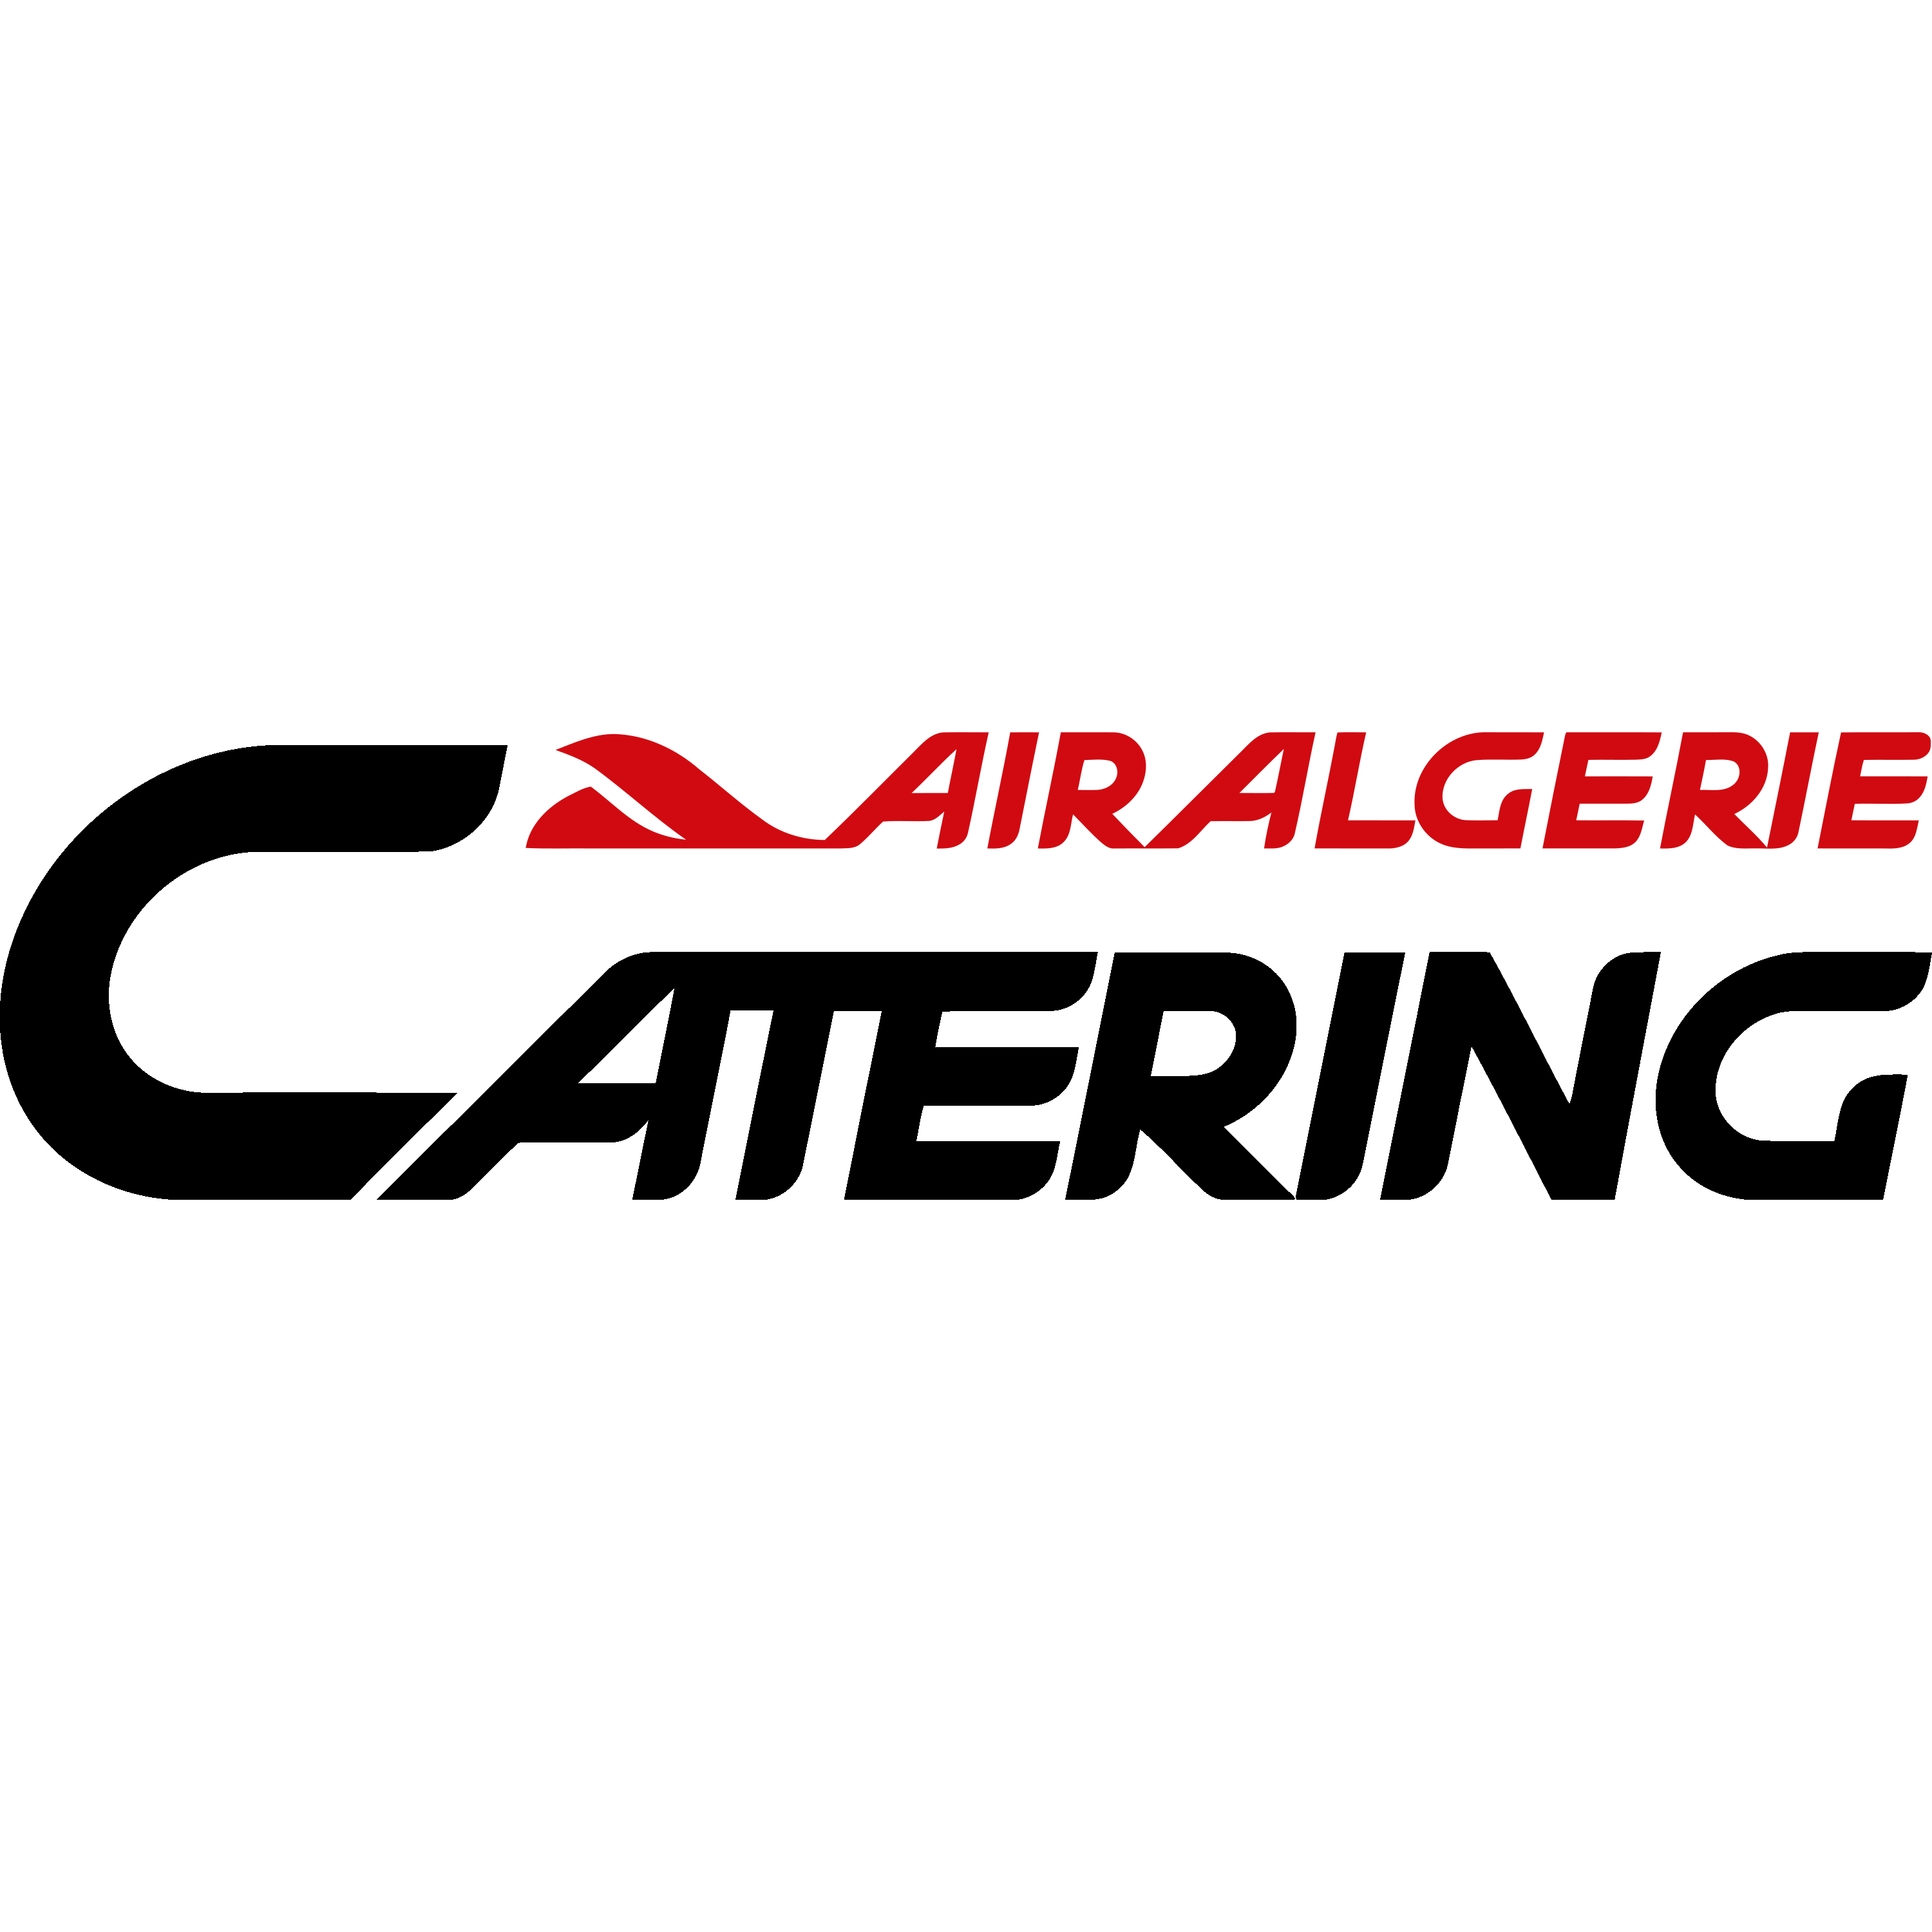 Air Algerie Catering Logo  Transparent Photo